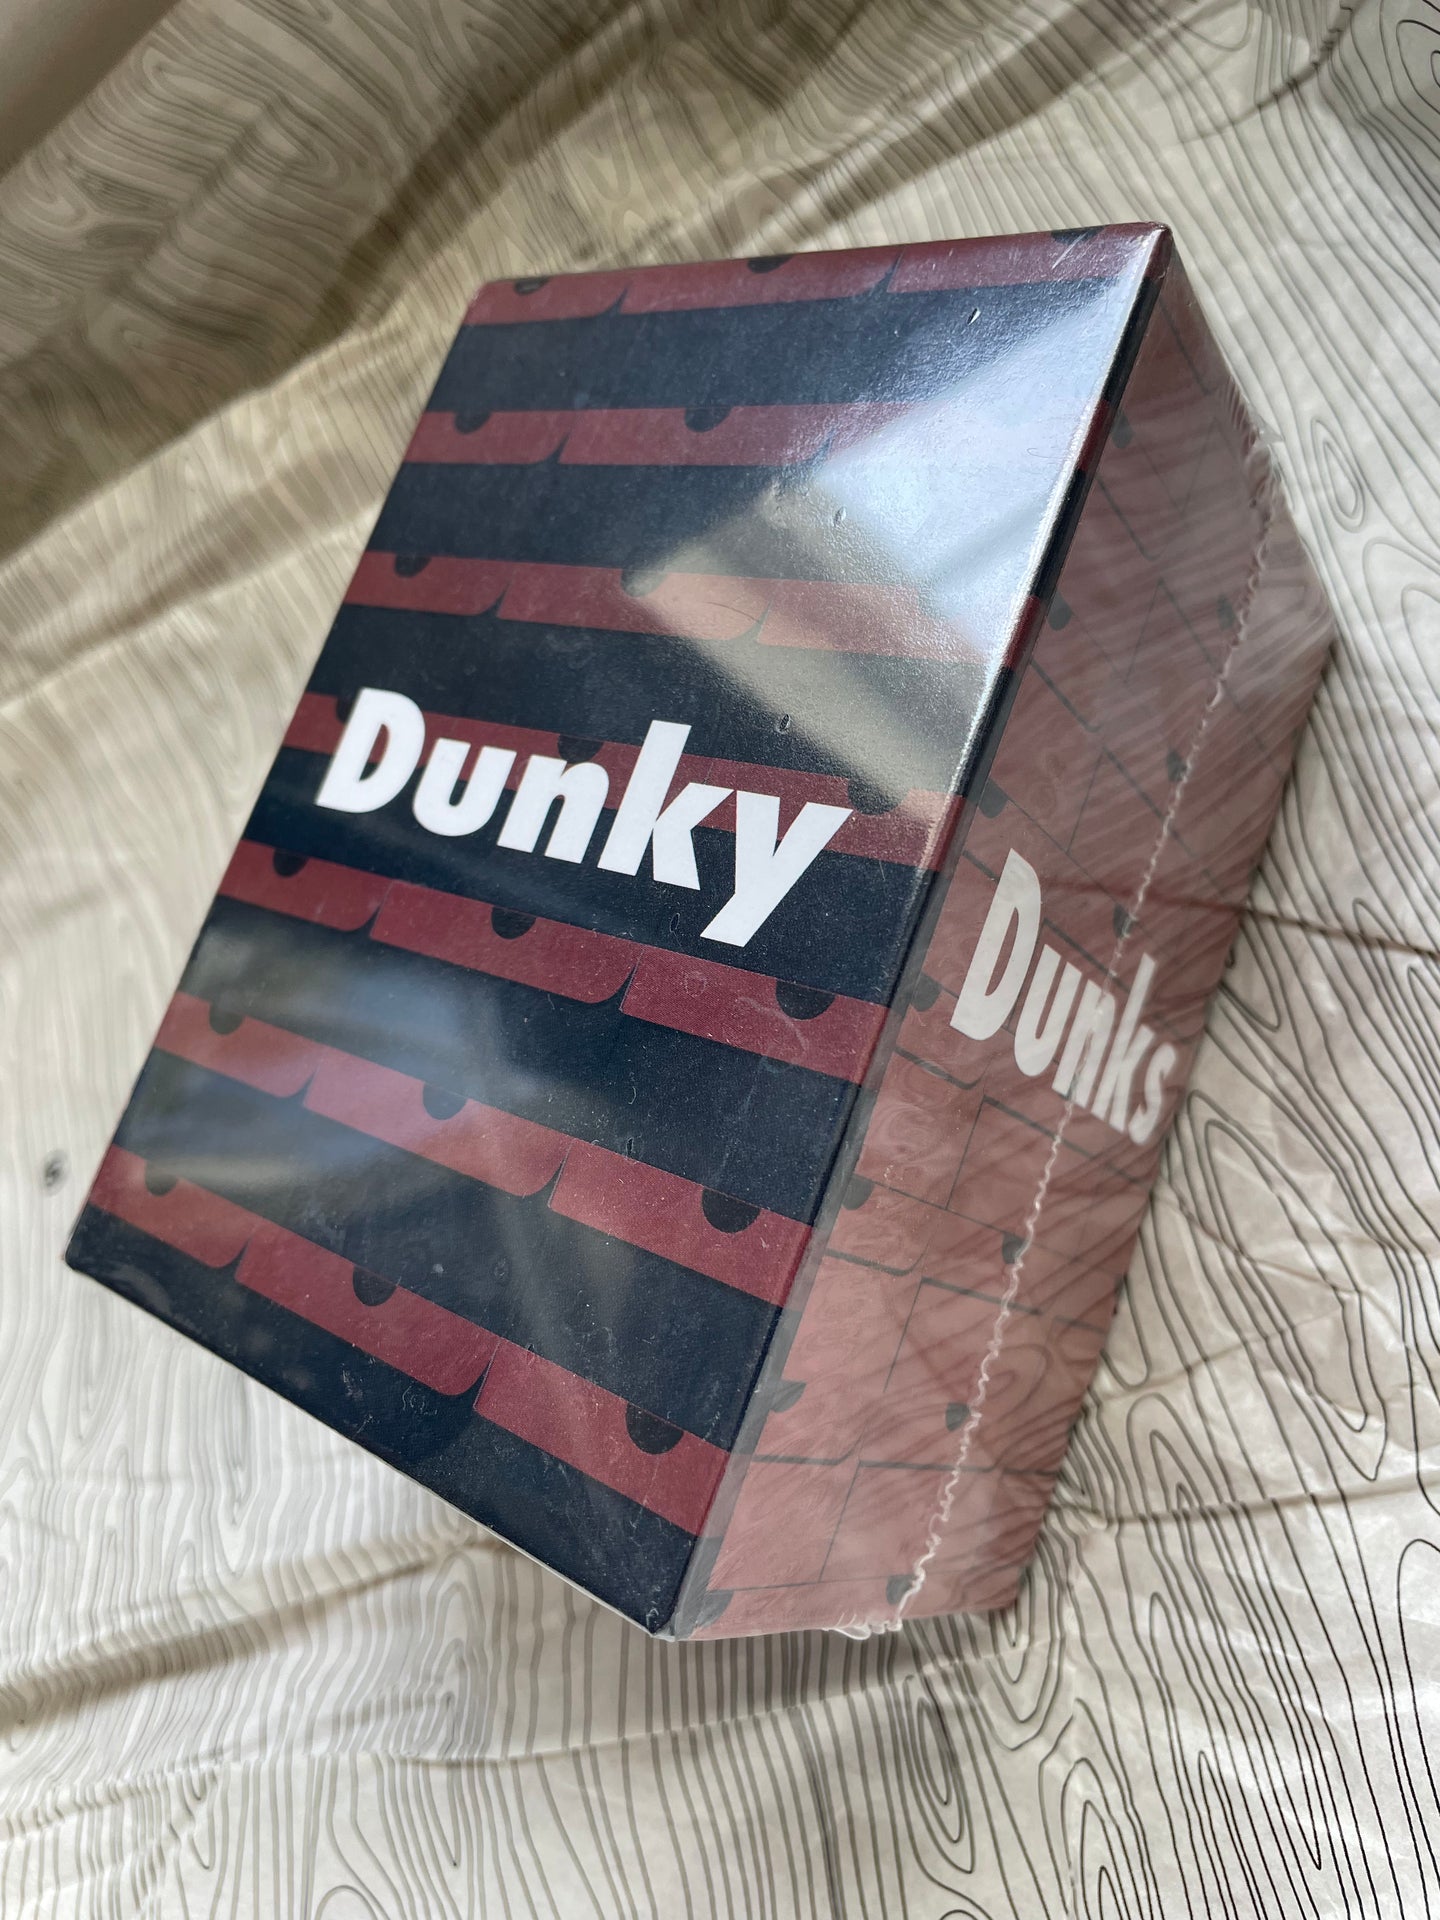 #DunkyDunks Unopened - Box